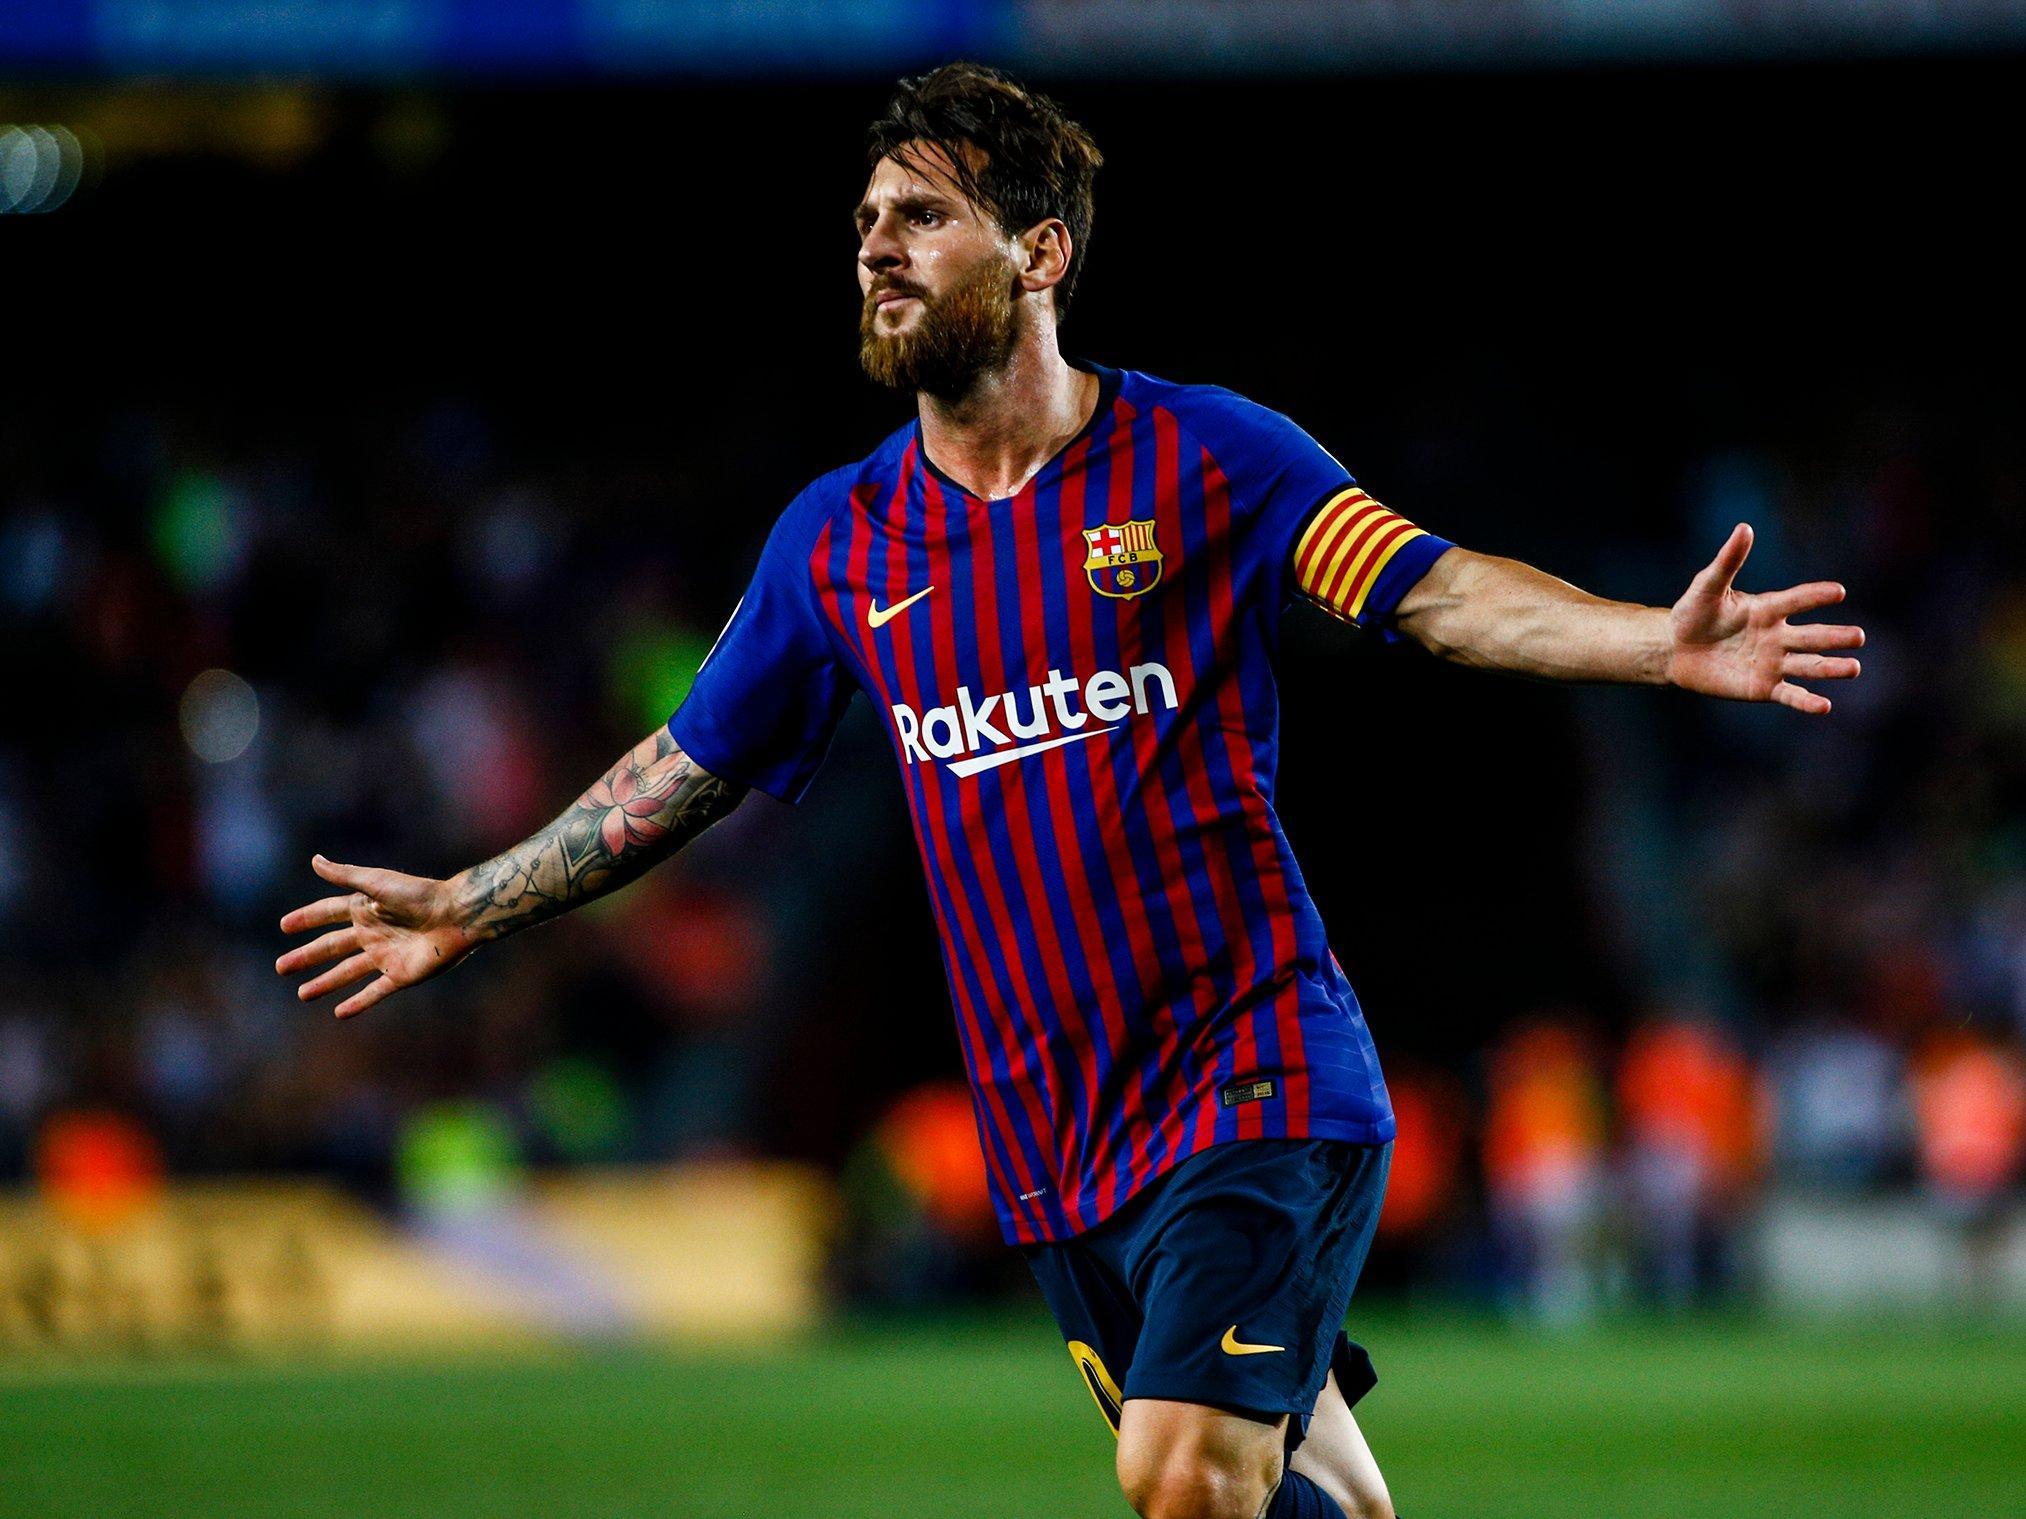 2026 x 1519 · jpeg - Lionel Messi 2019 Wallpapers - Wallpaper Cave